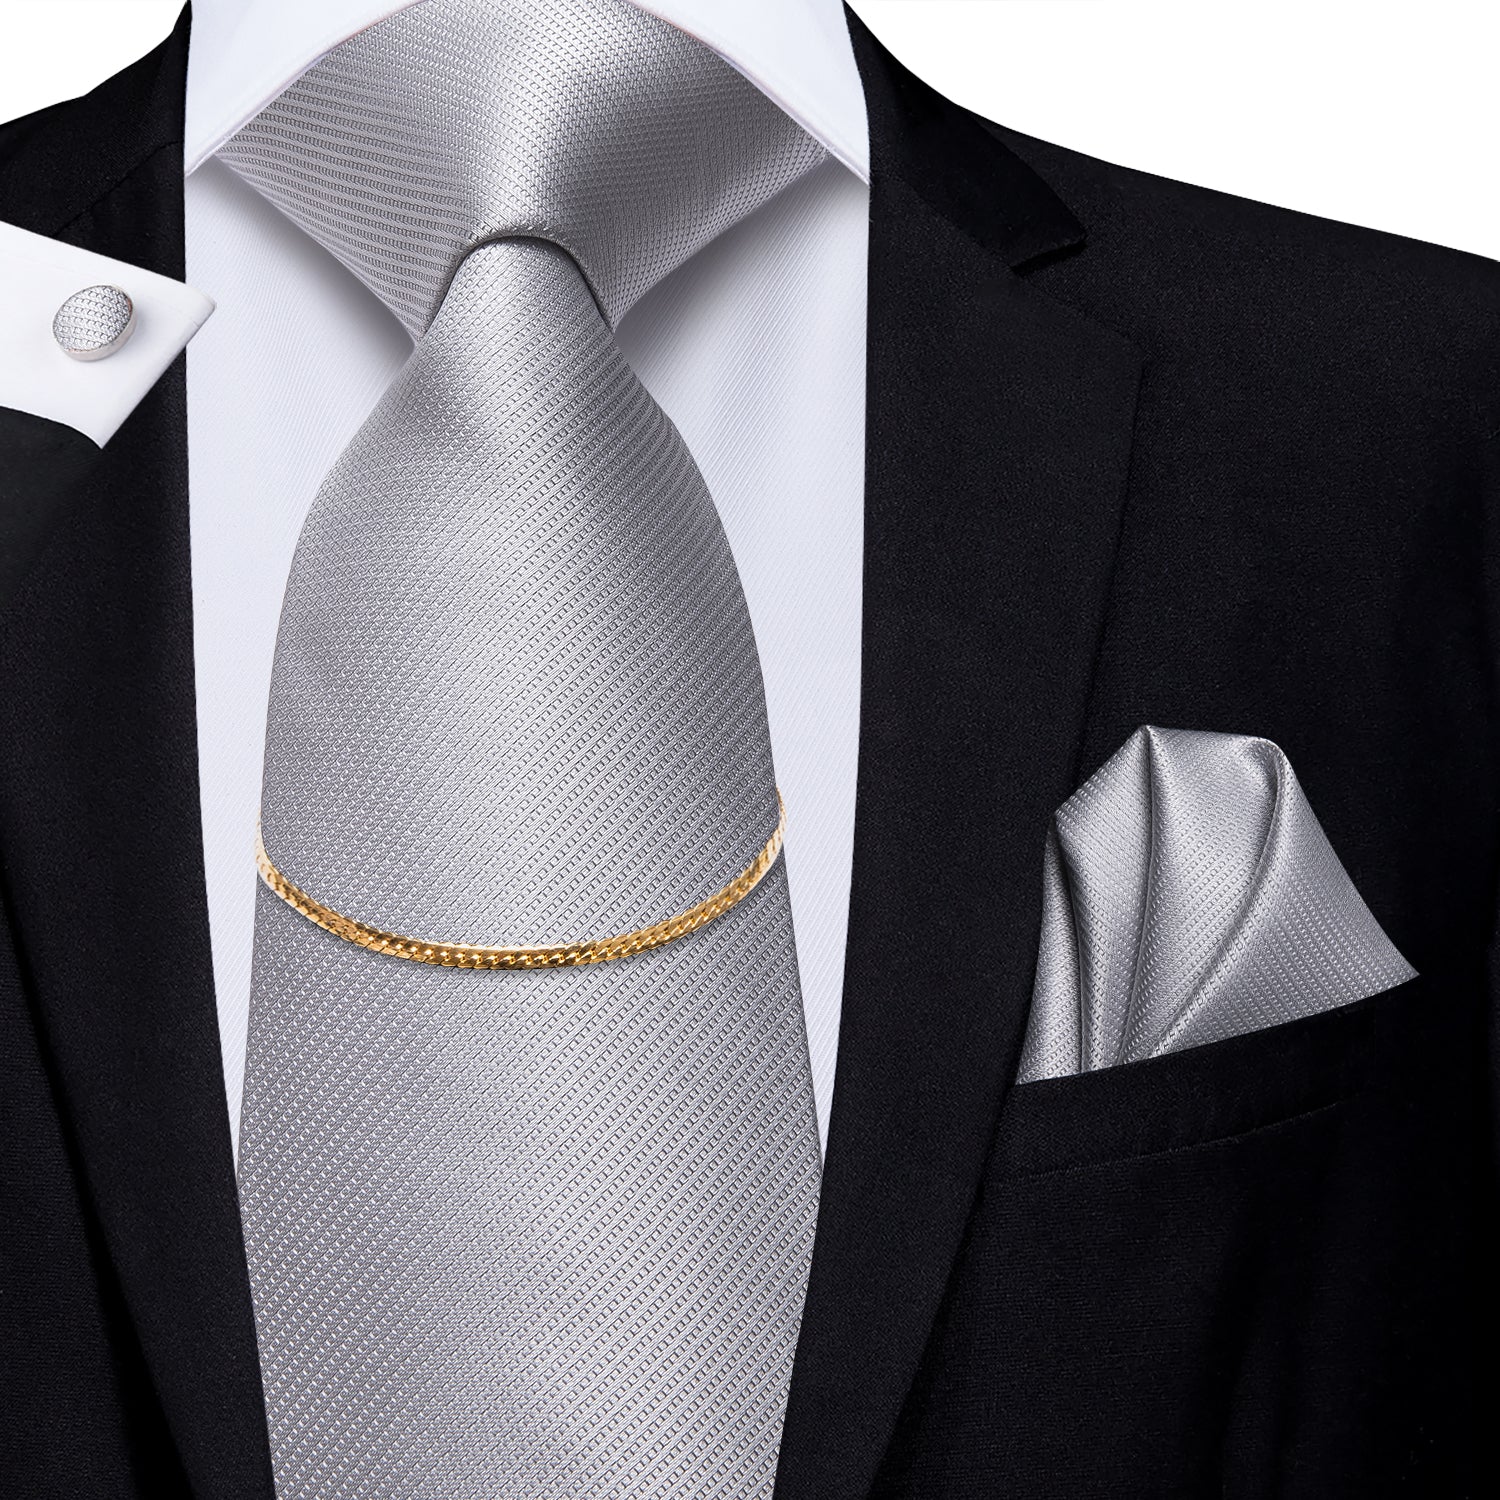 Popular Grey Tie Pocket Square Cufflinks Set With Golden Chain